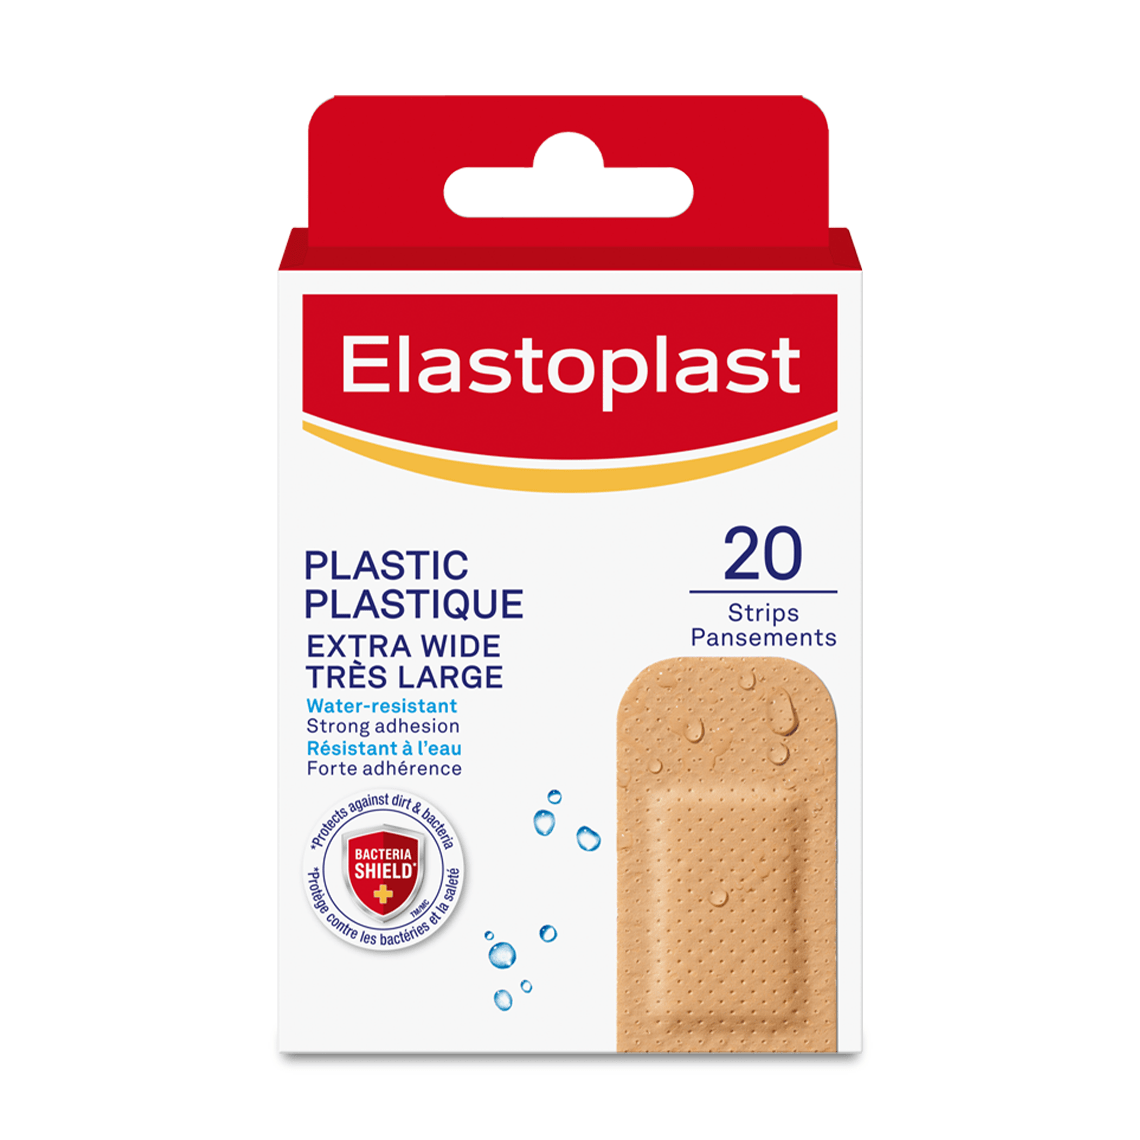 Elastoplast Extra Wide Water-Resistant Plastic Bandages